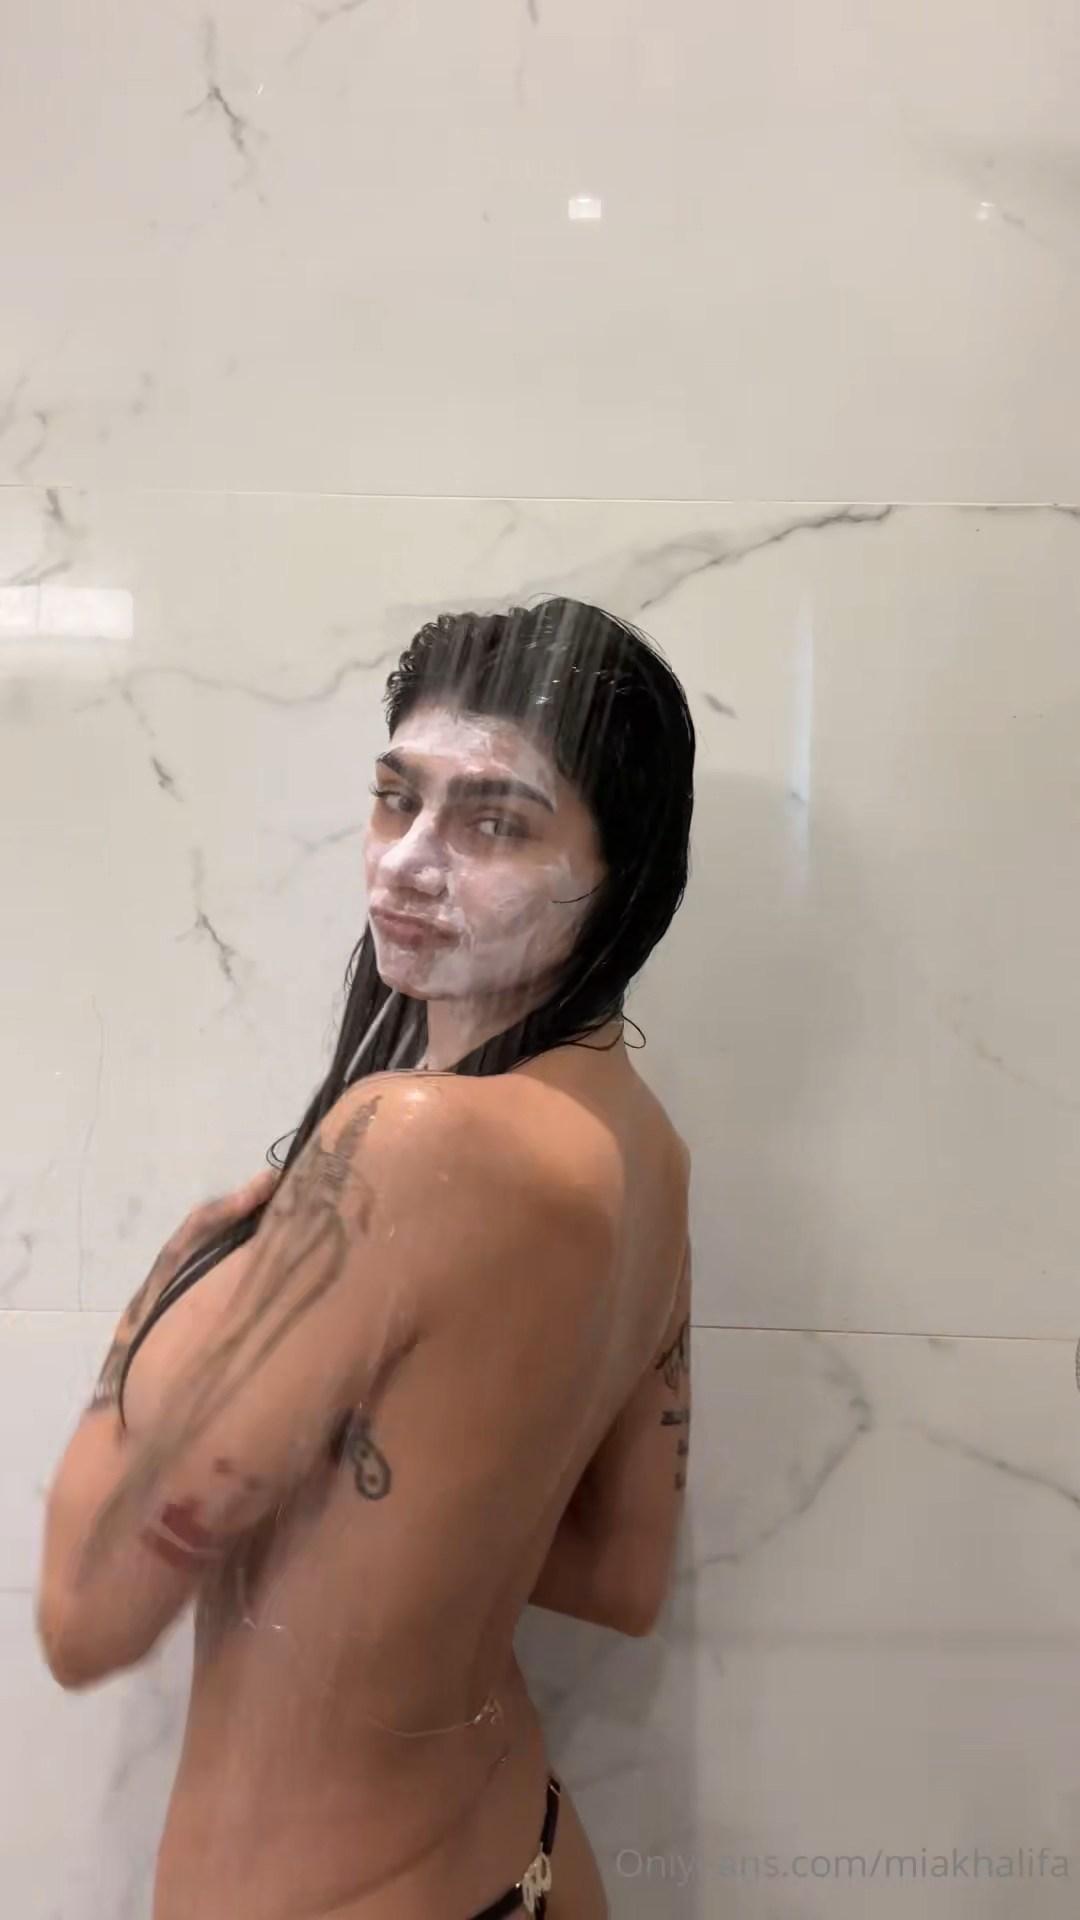 mia khalifa nude shower shaving onlyfans video leaked caflcb